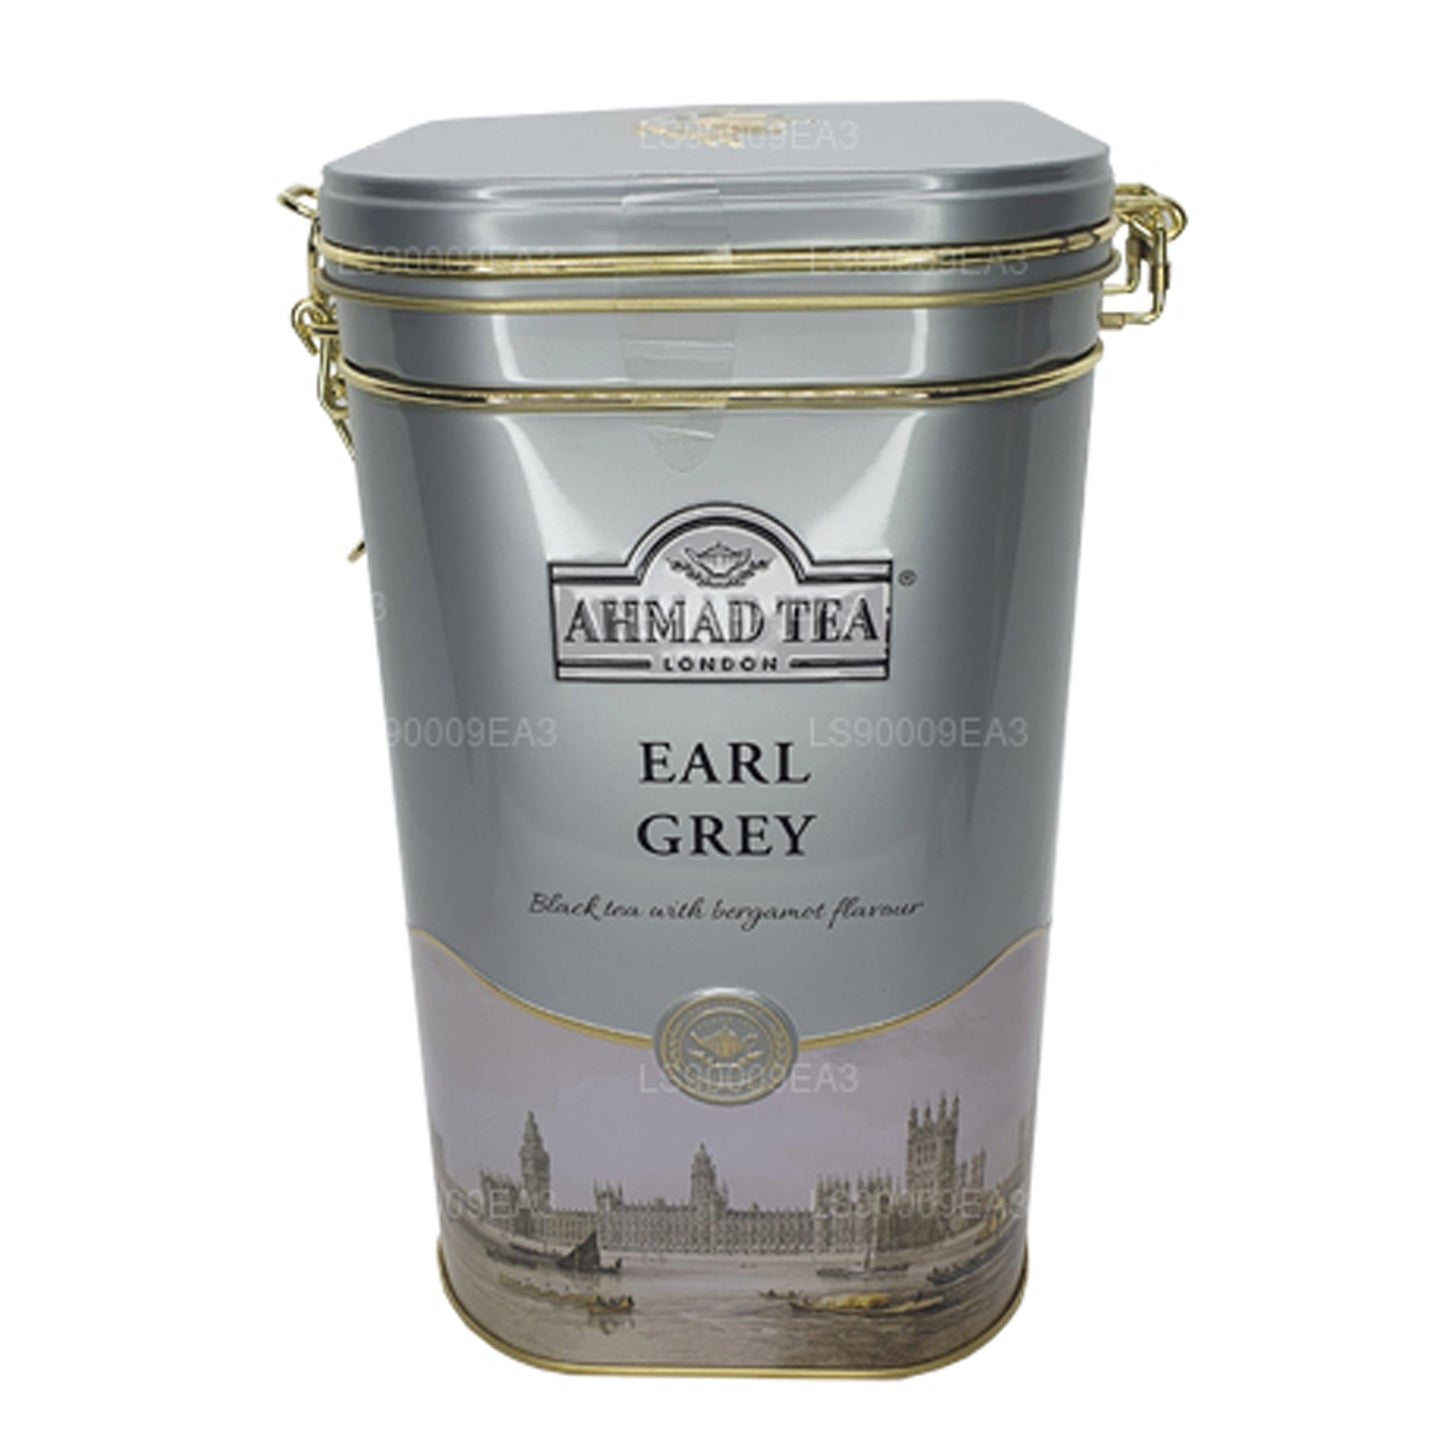 Ahamad Earl Grey Black Tea met bergamotsmaak (450 g)